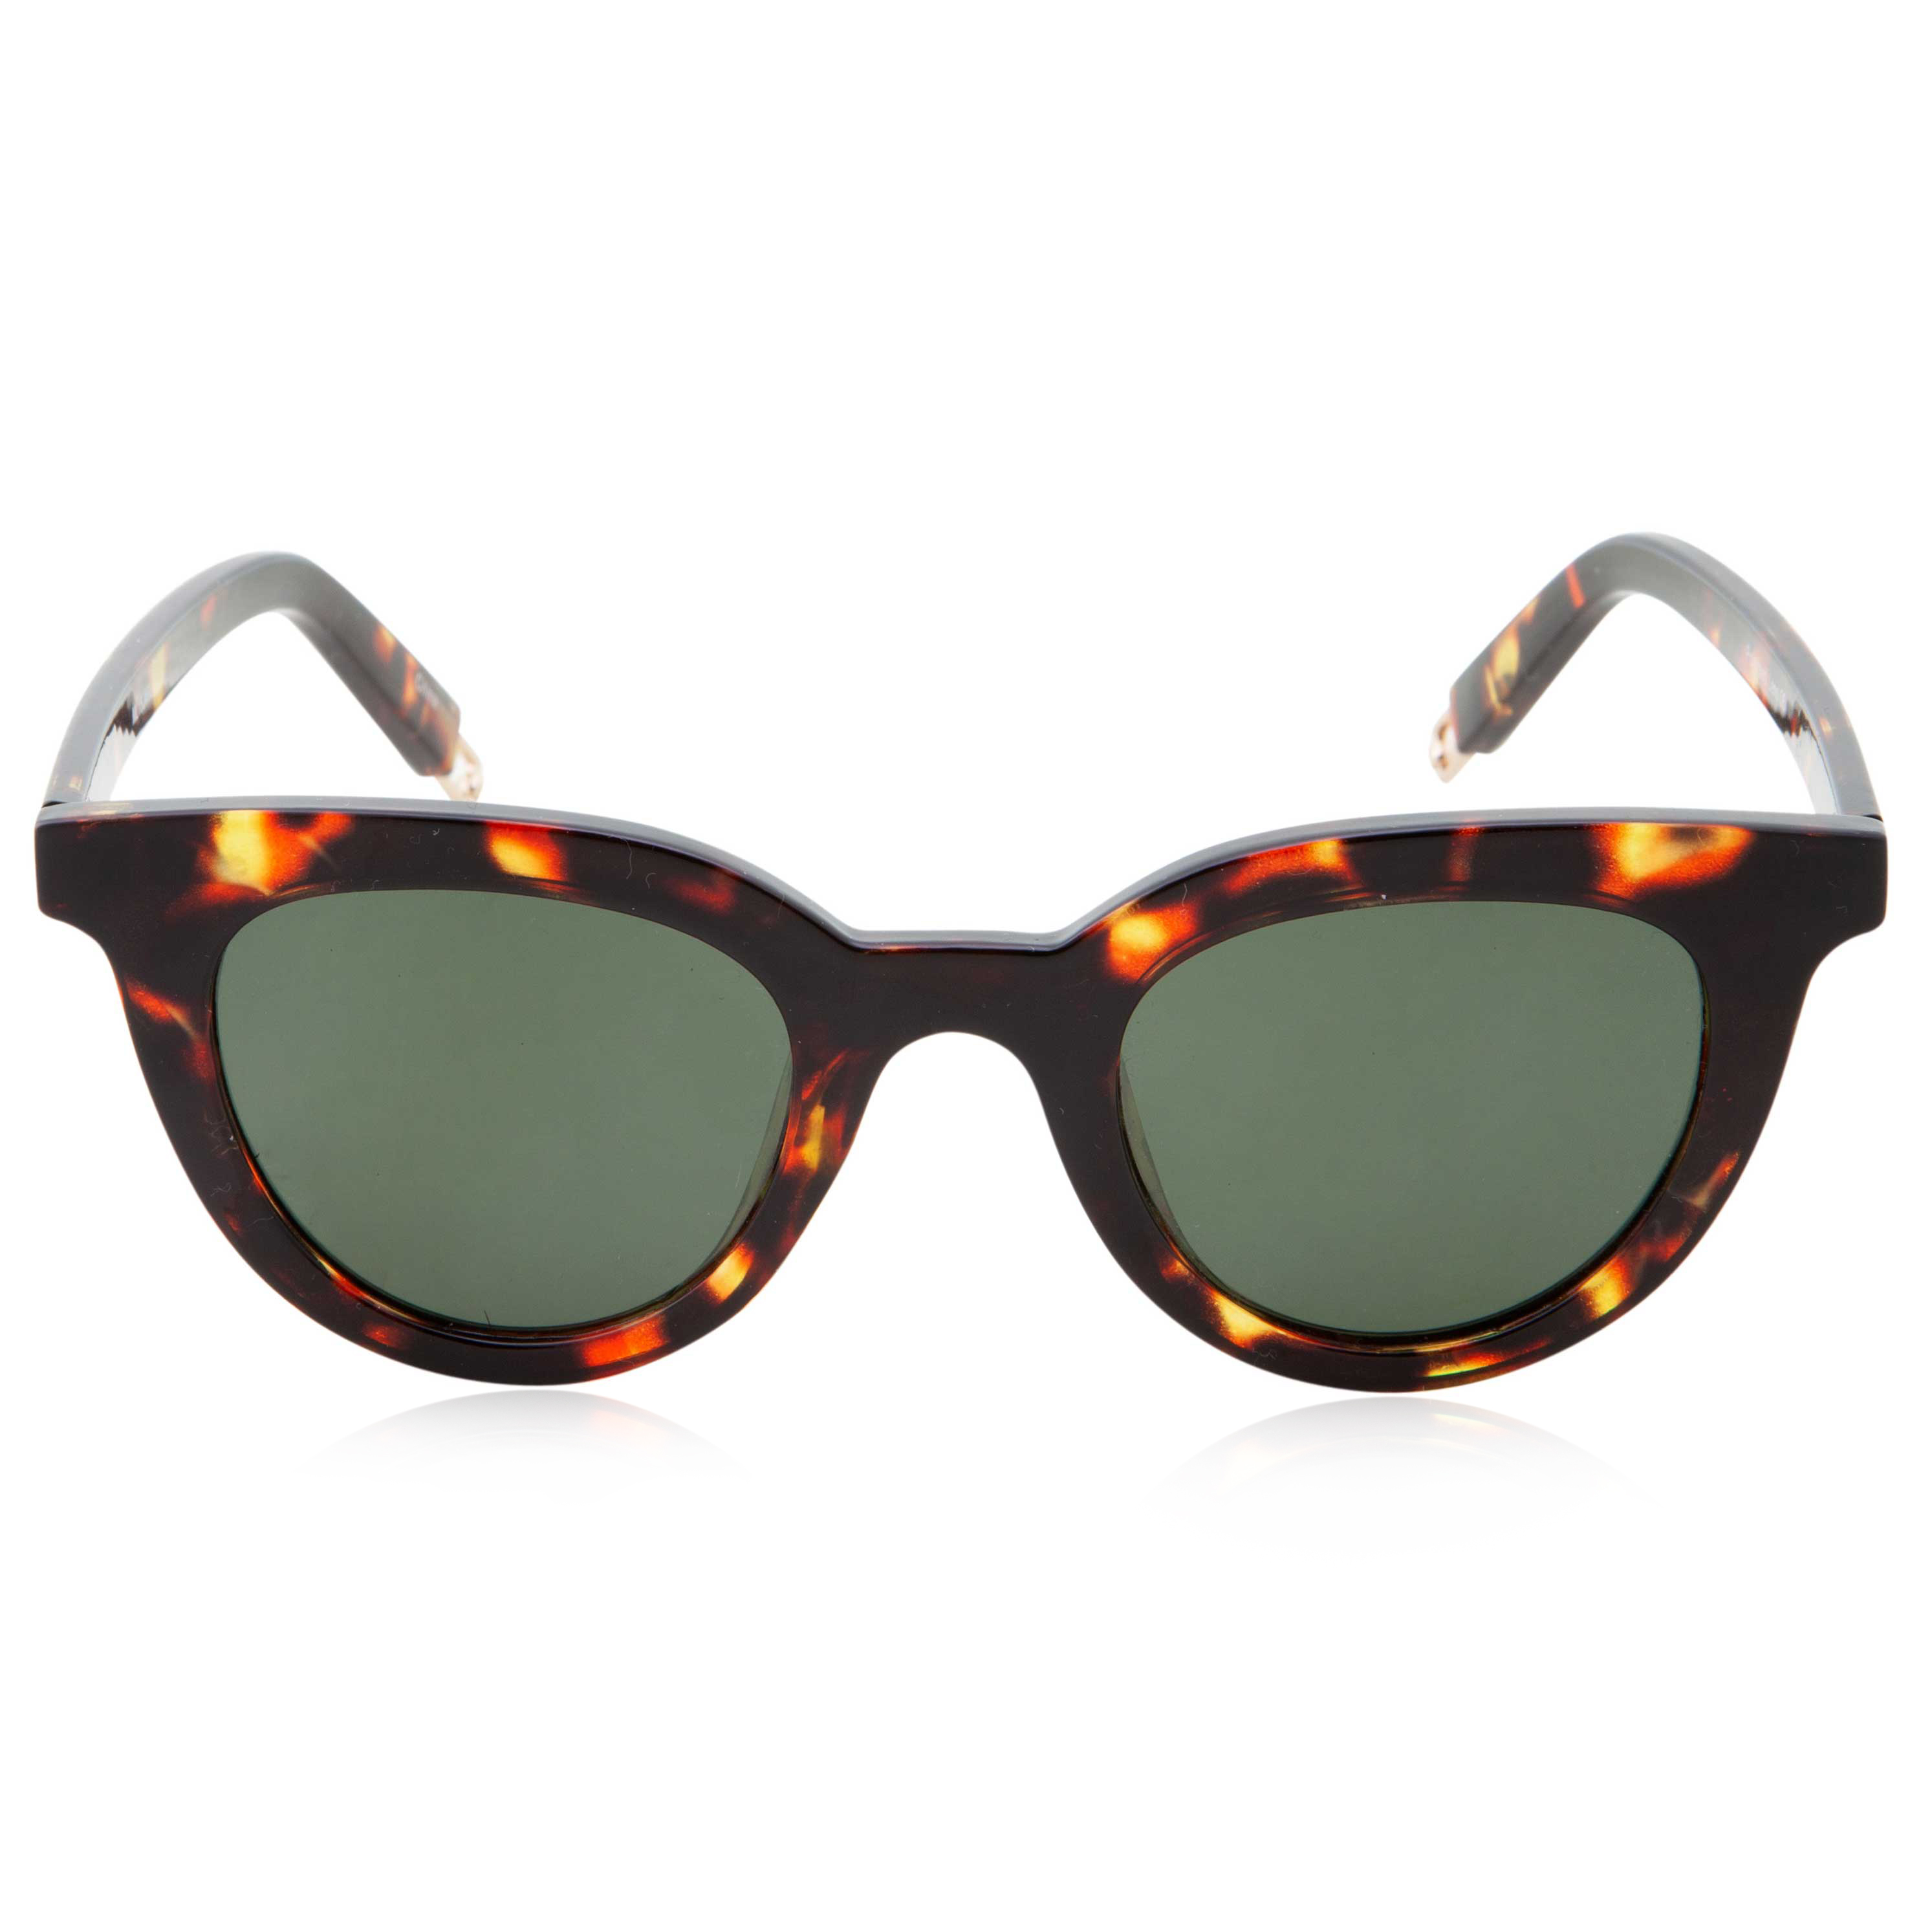 grinderPUNCH Vintage Inspired Horned Rim Tortoise Plastic Frame Round Sunglasses - image 3 of 5